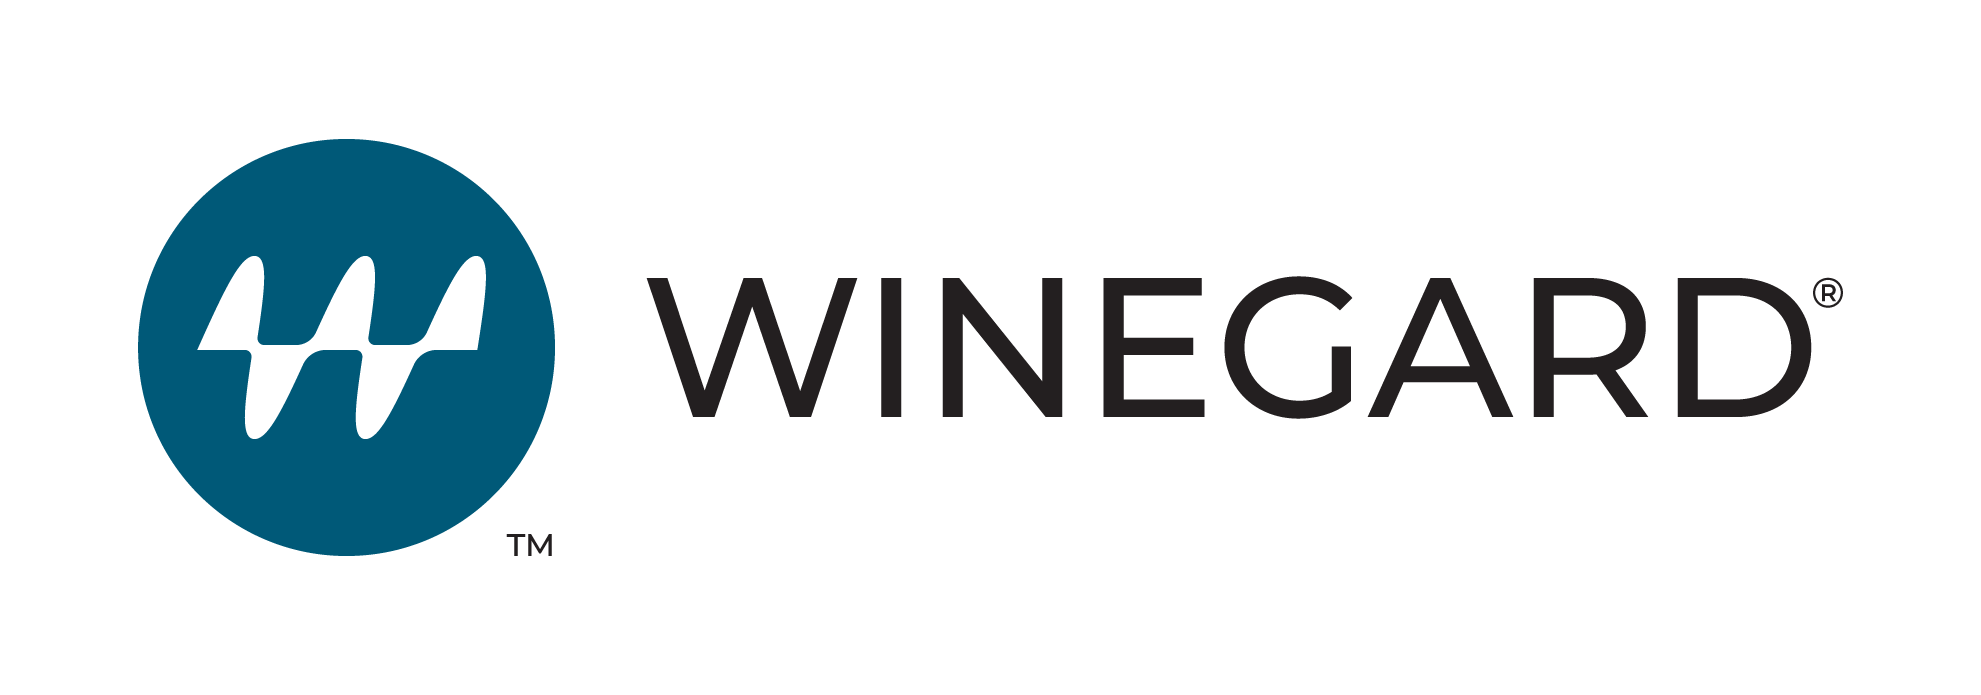 Winegard Company Acq